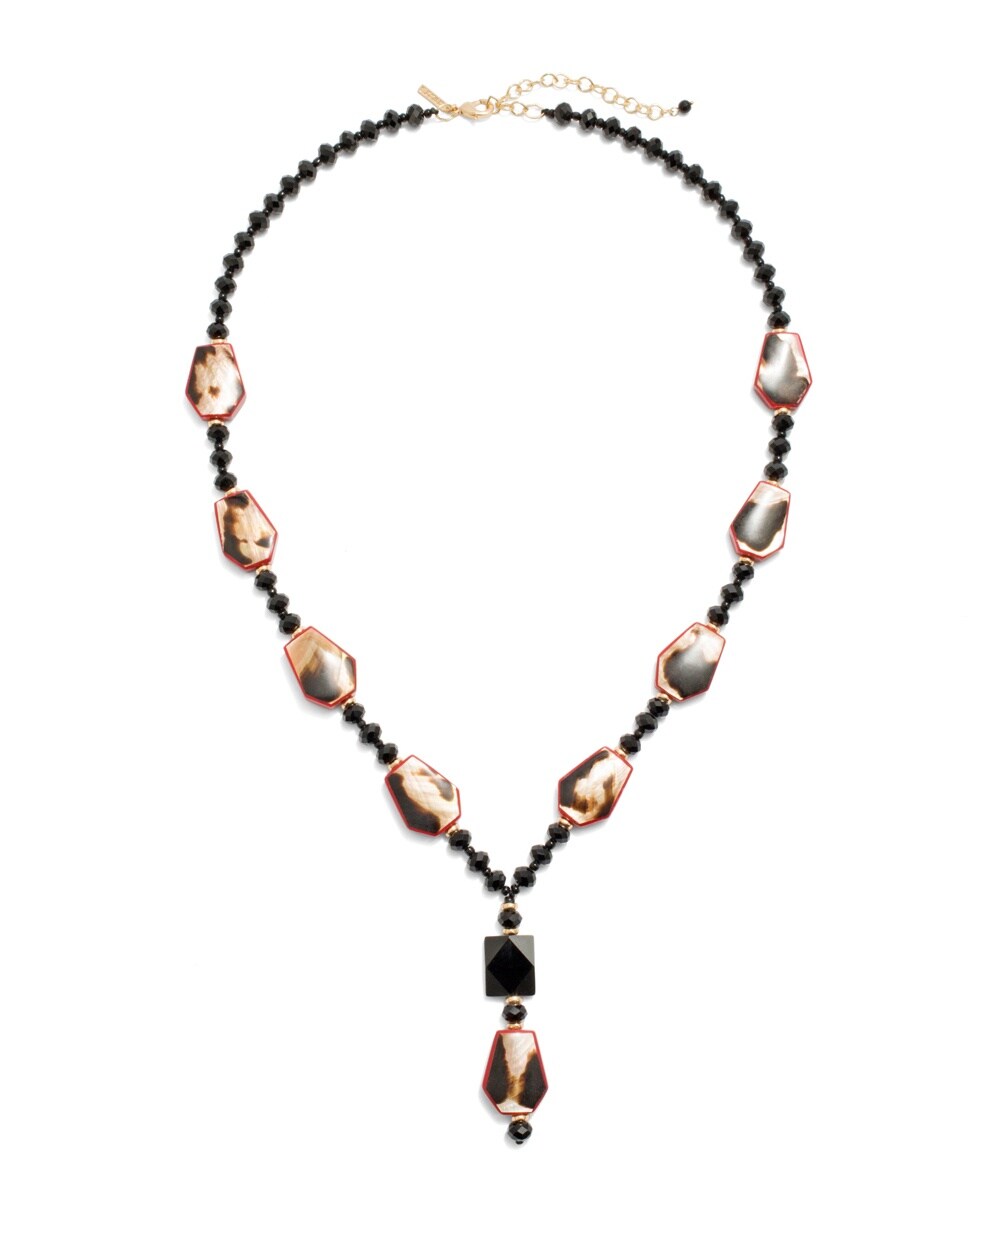 The Collectibles Tigris Necklace